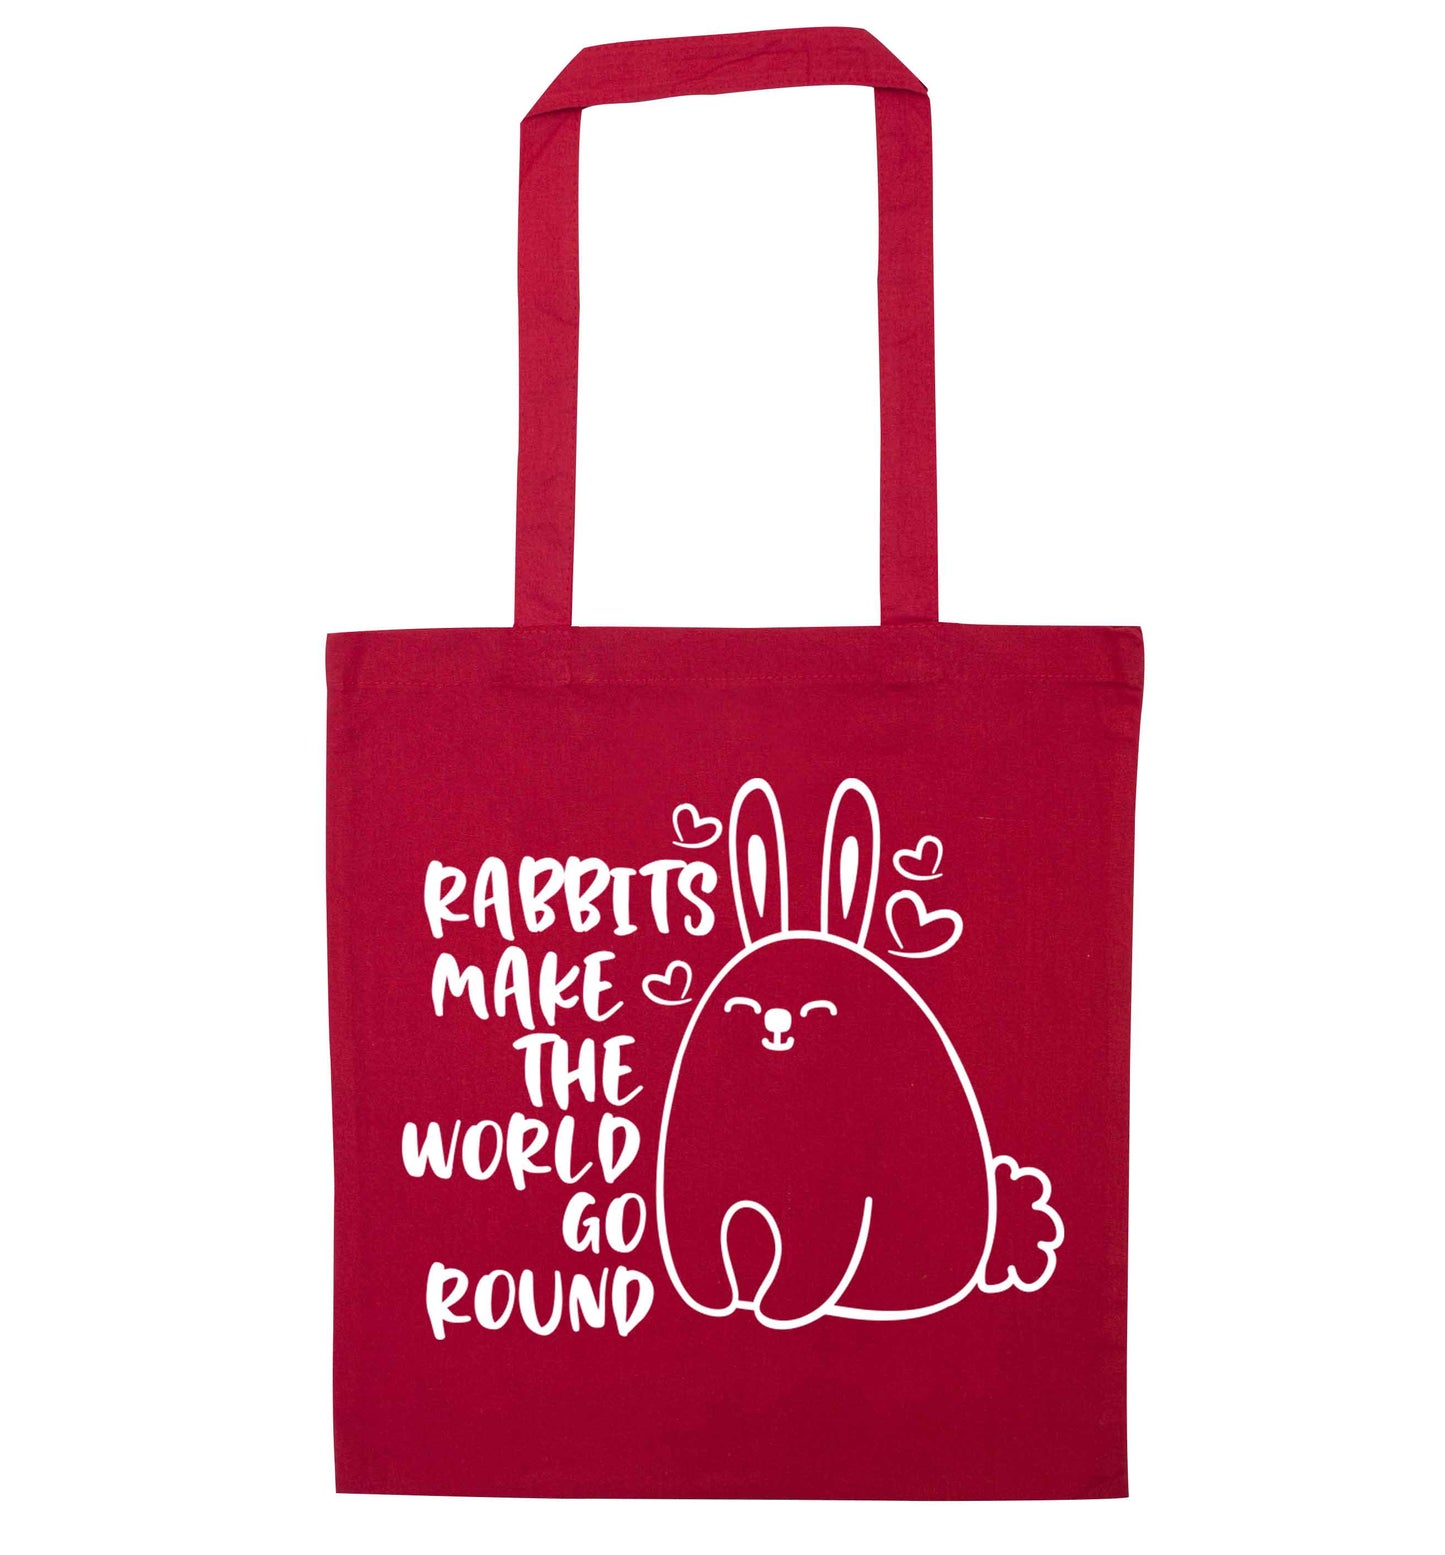 Rabbits make the world go round red tote bag